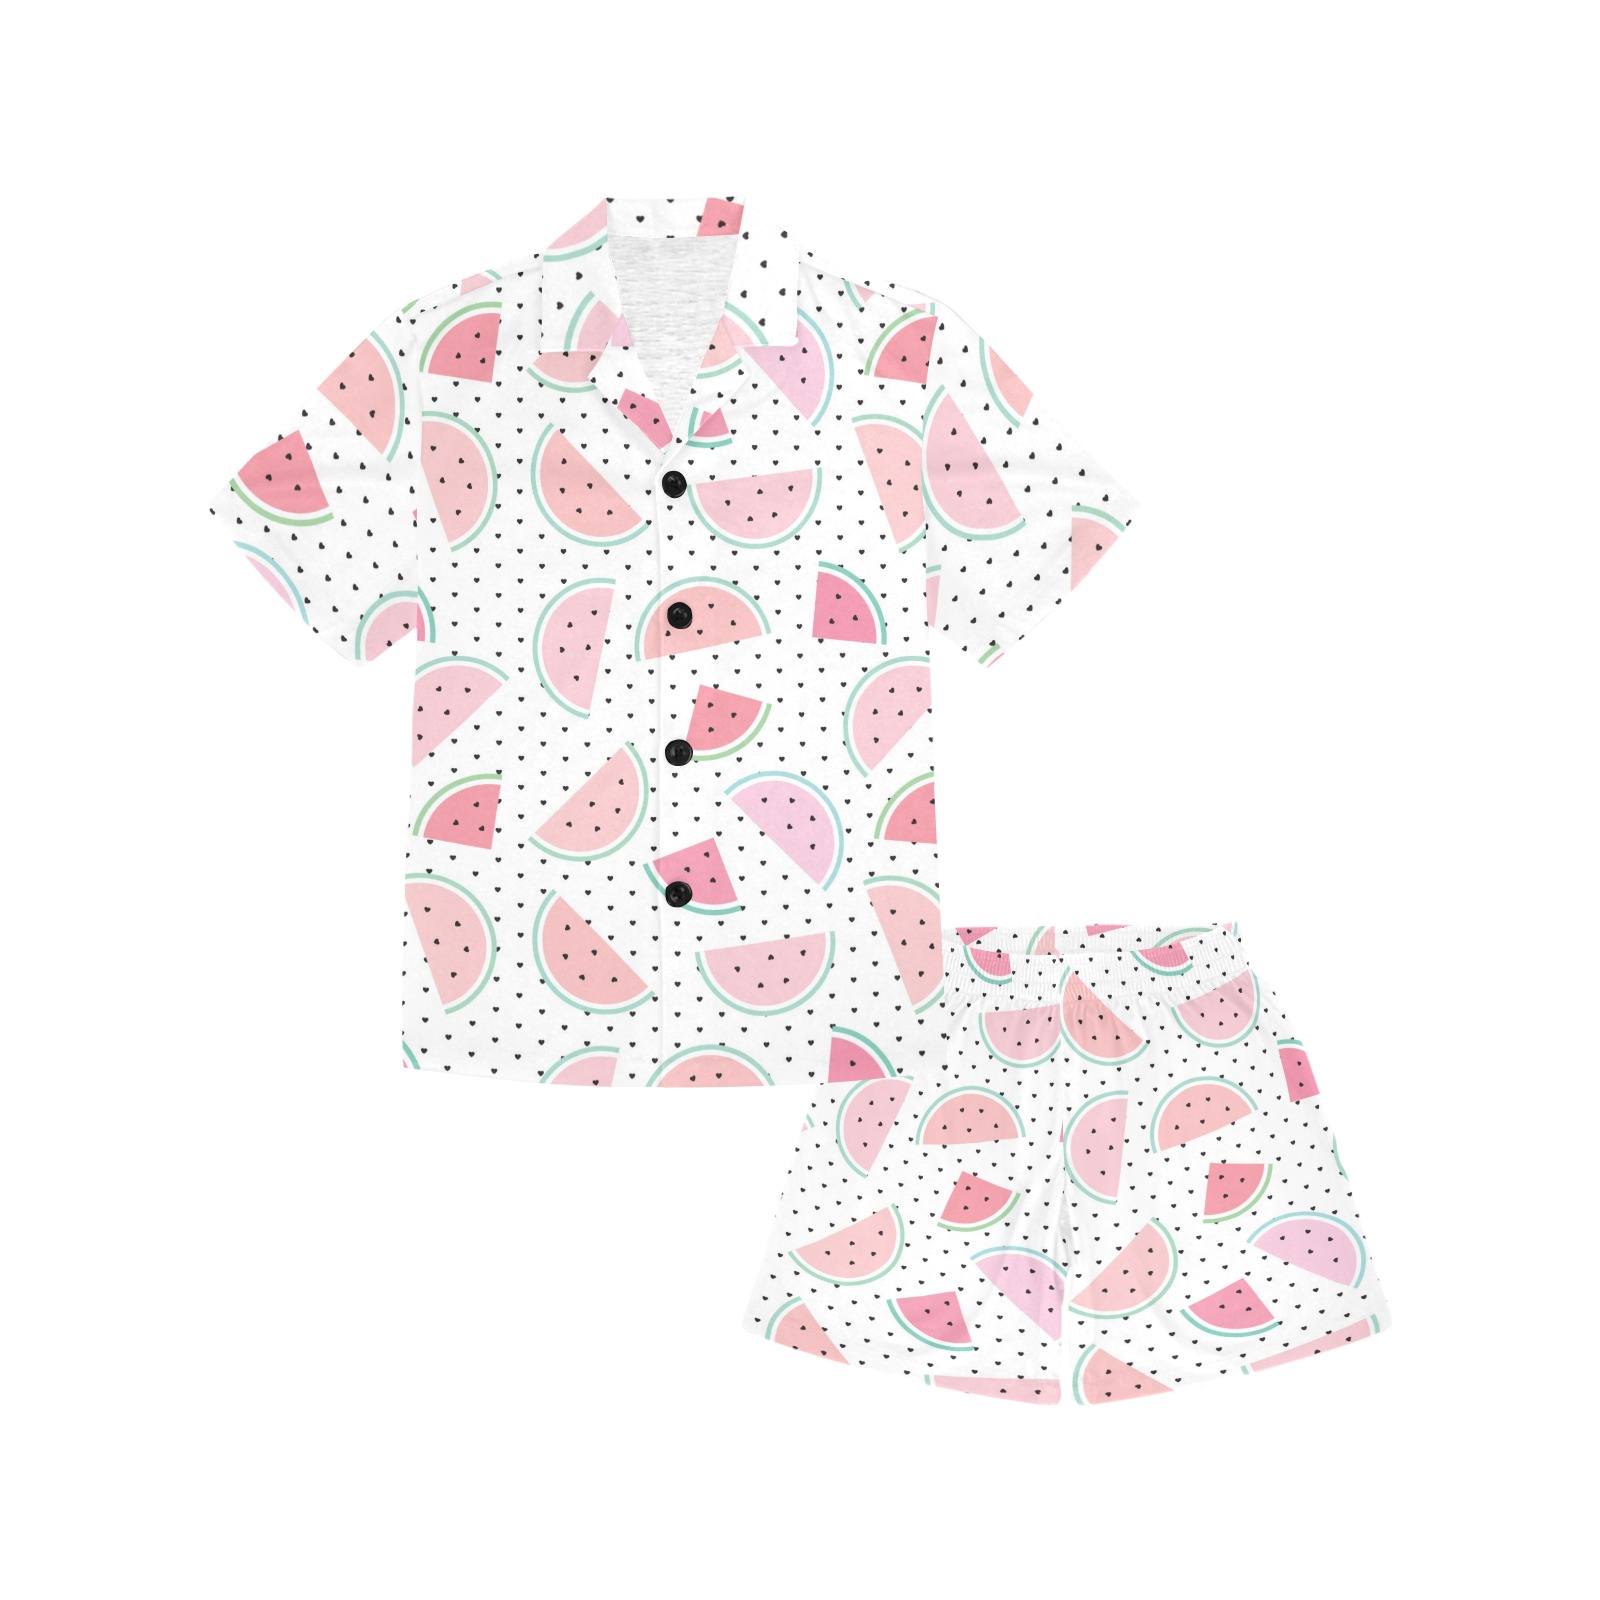 bb nmm11222 Big Girls' V-Neck Short Pajama Set